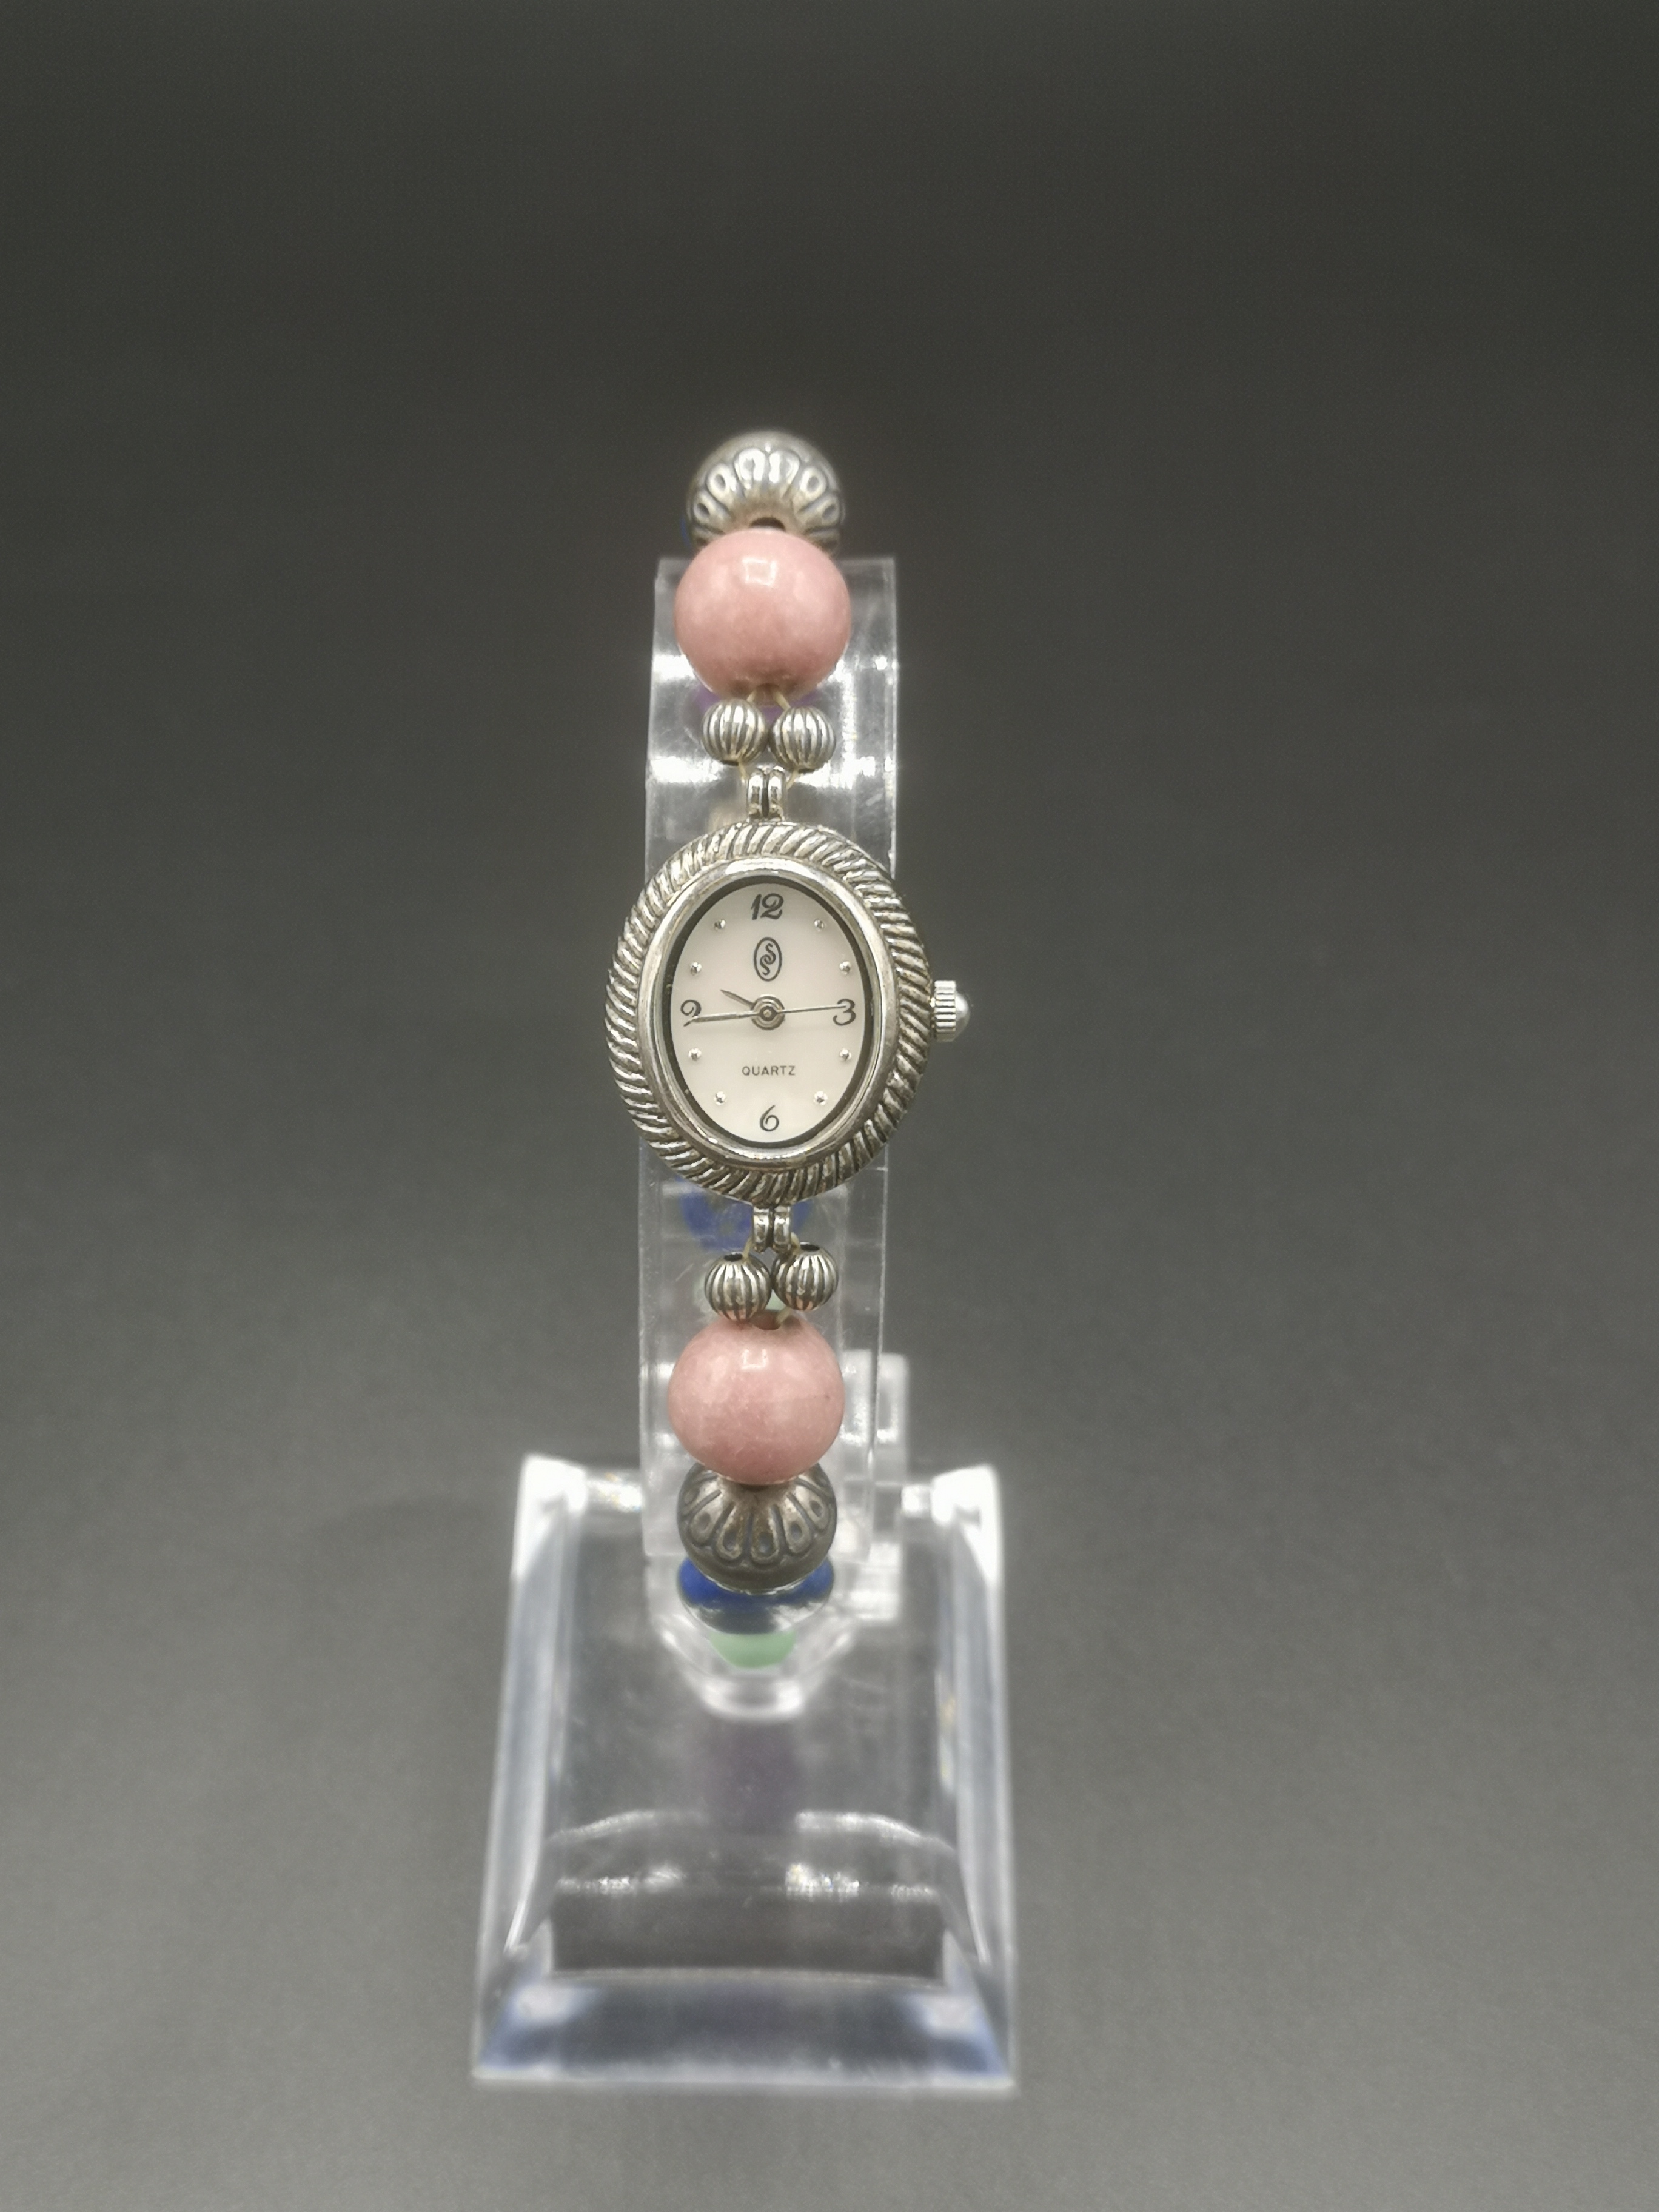 Watch bracelet set with silver and semi precious stone beads